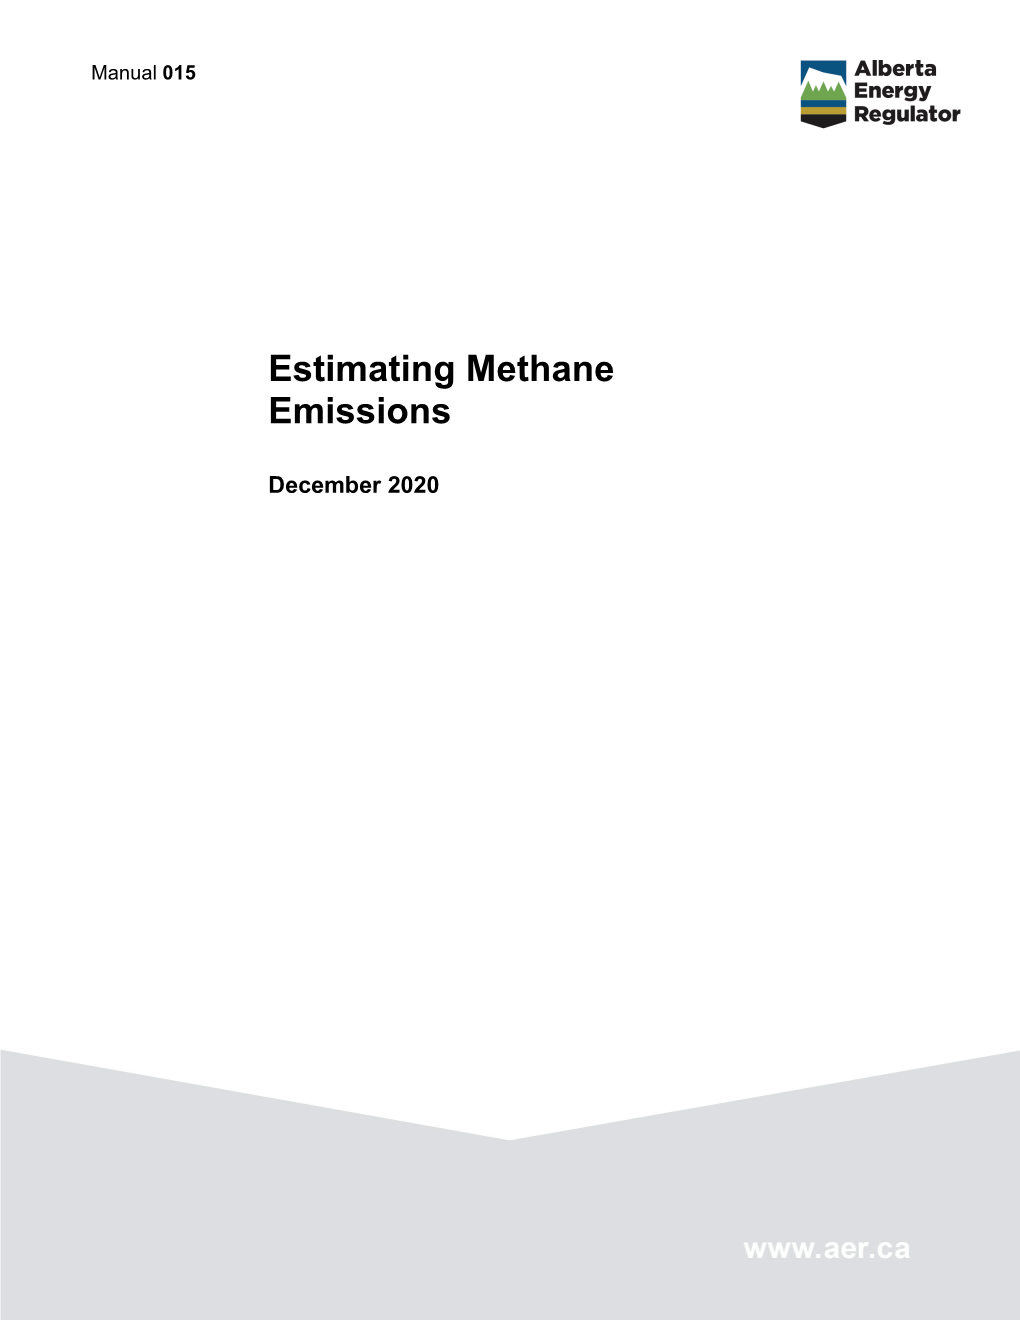 Manual 015: Estimating Methane Emissions